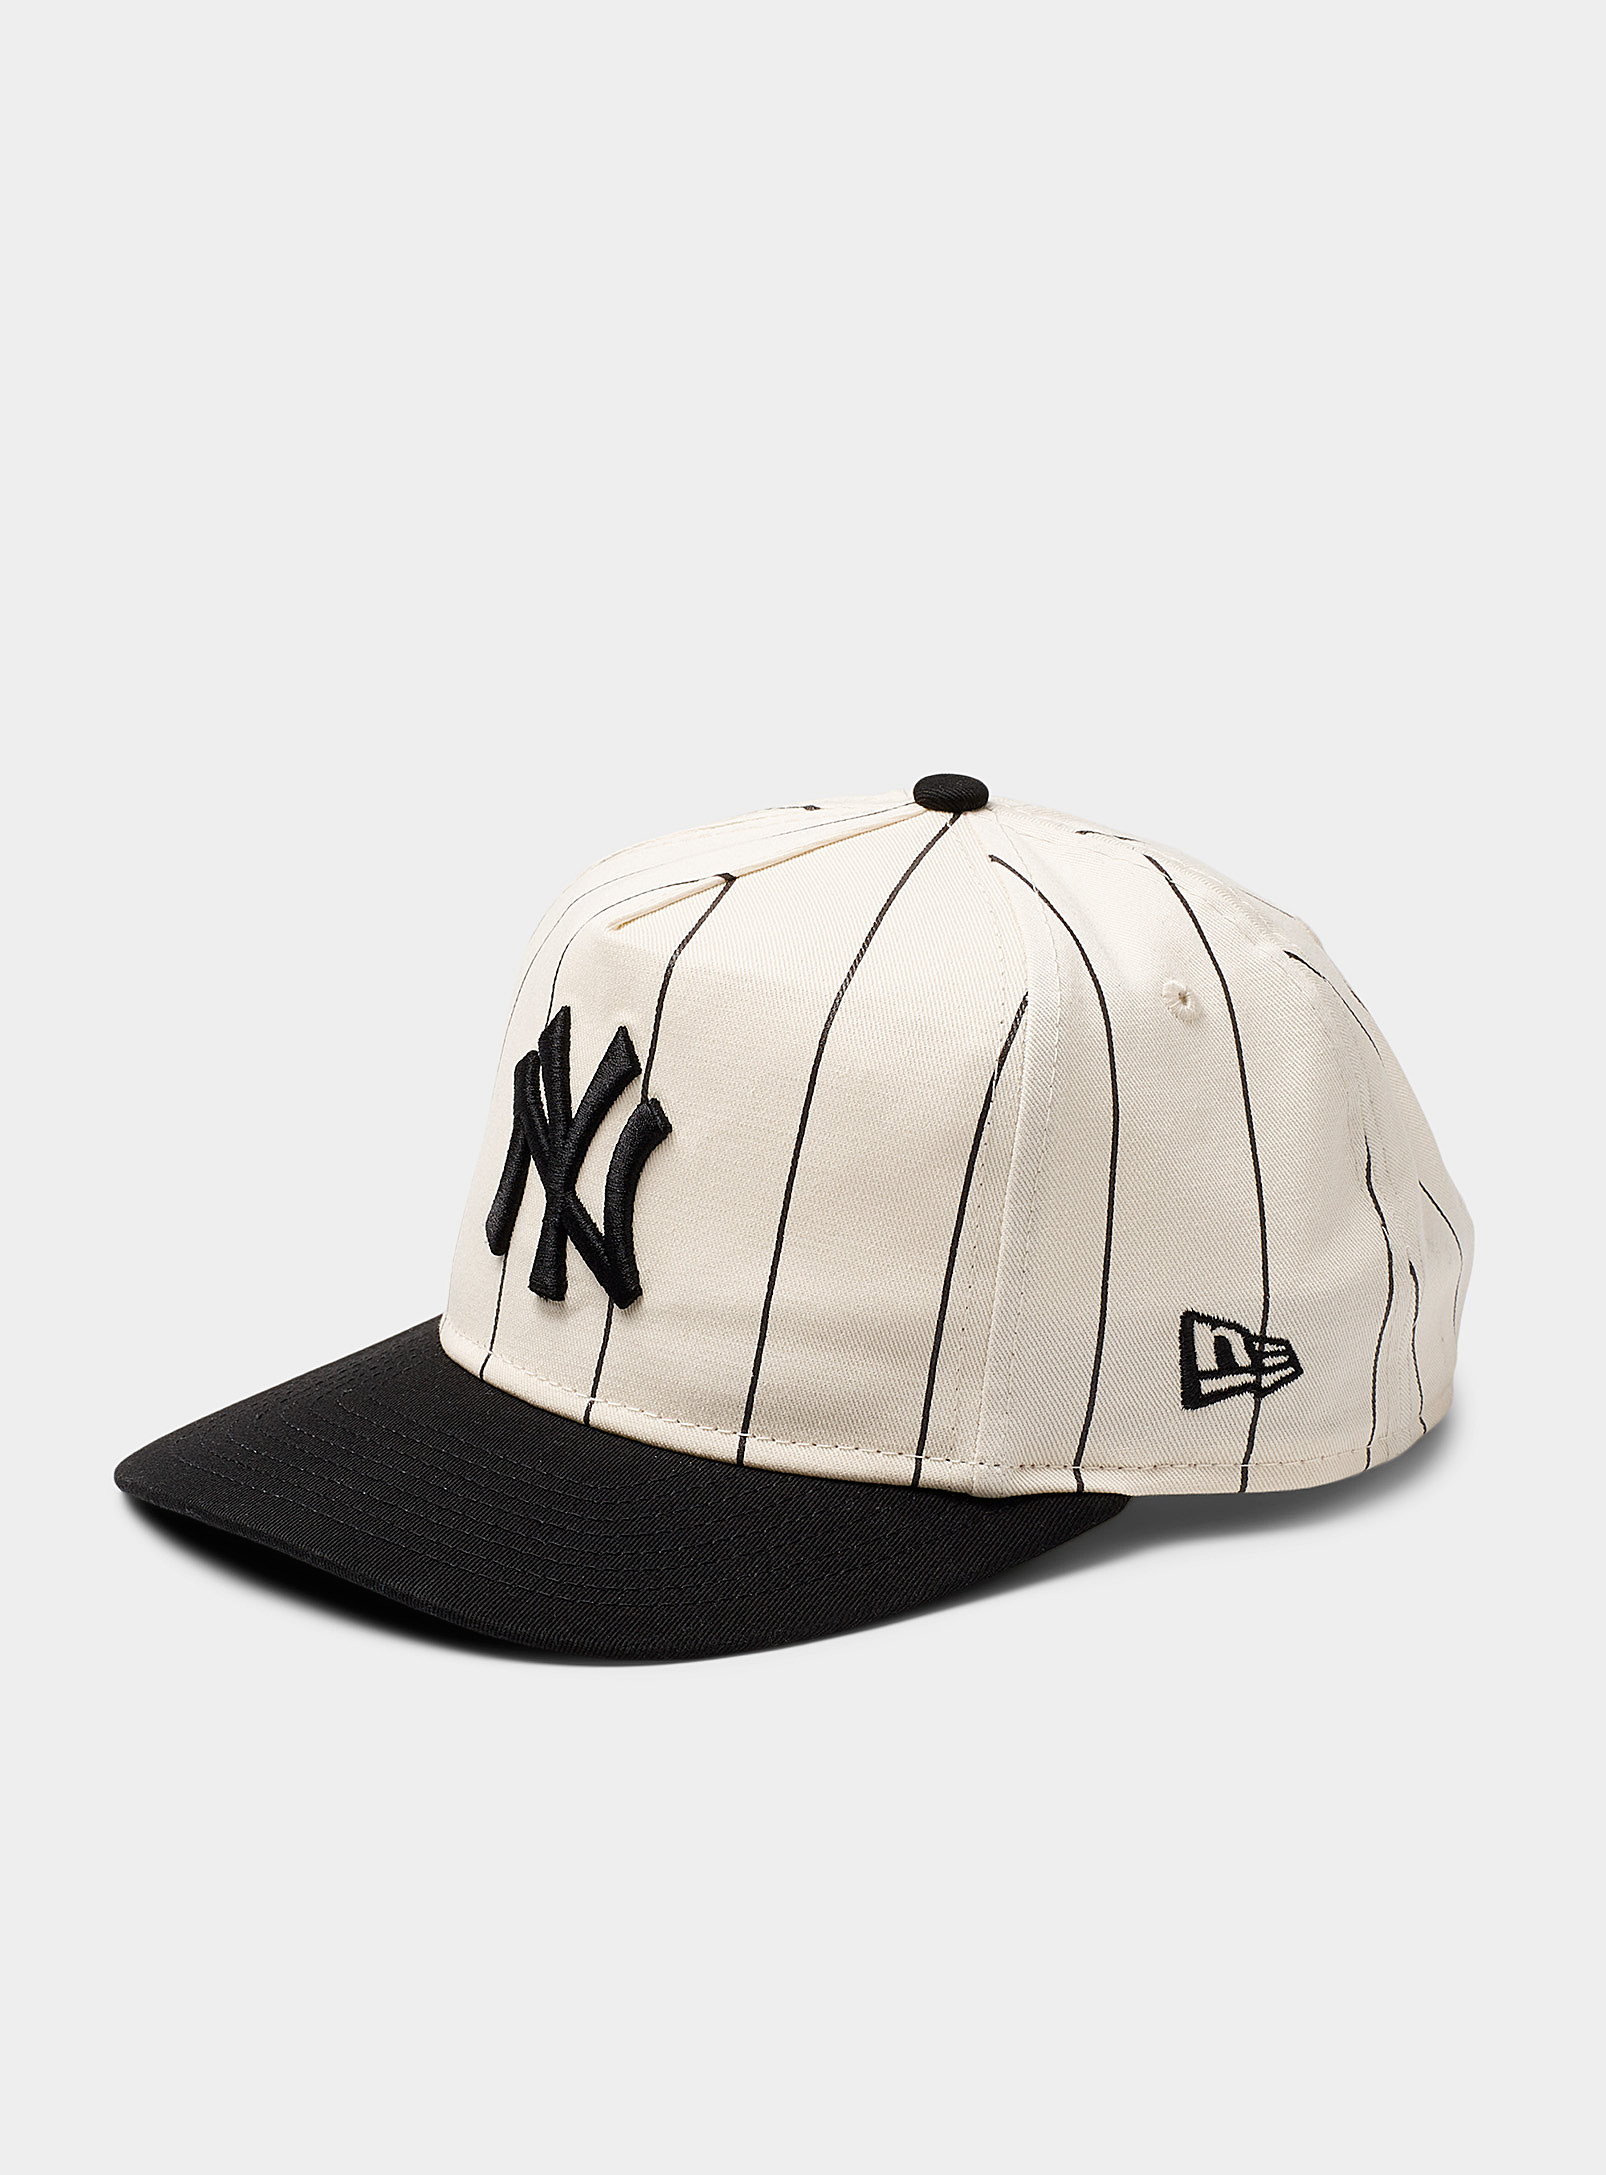 New Era - Men's Yankees baseball cap